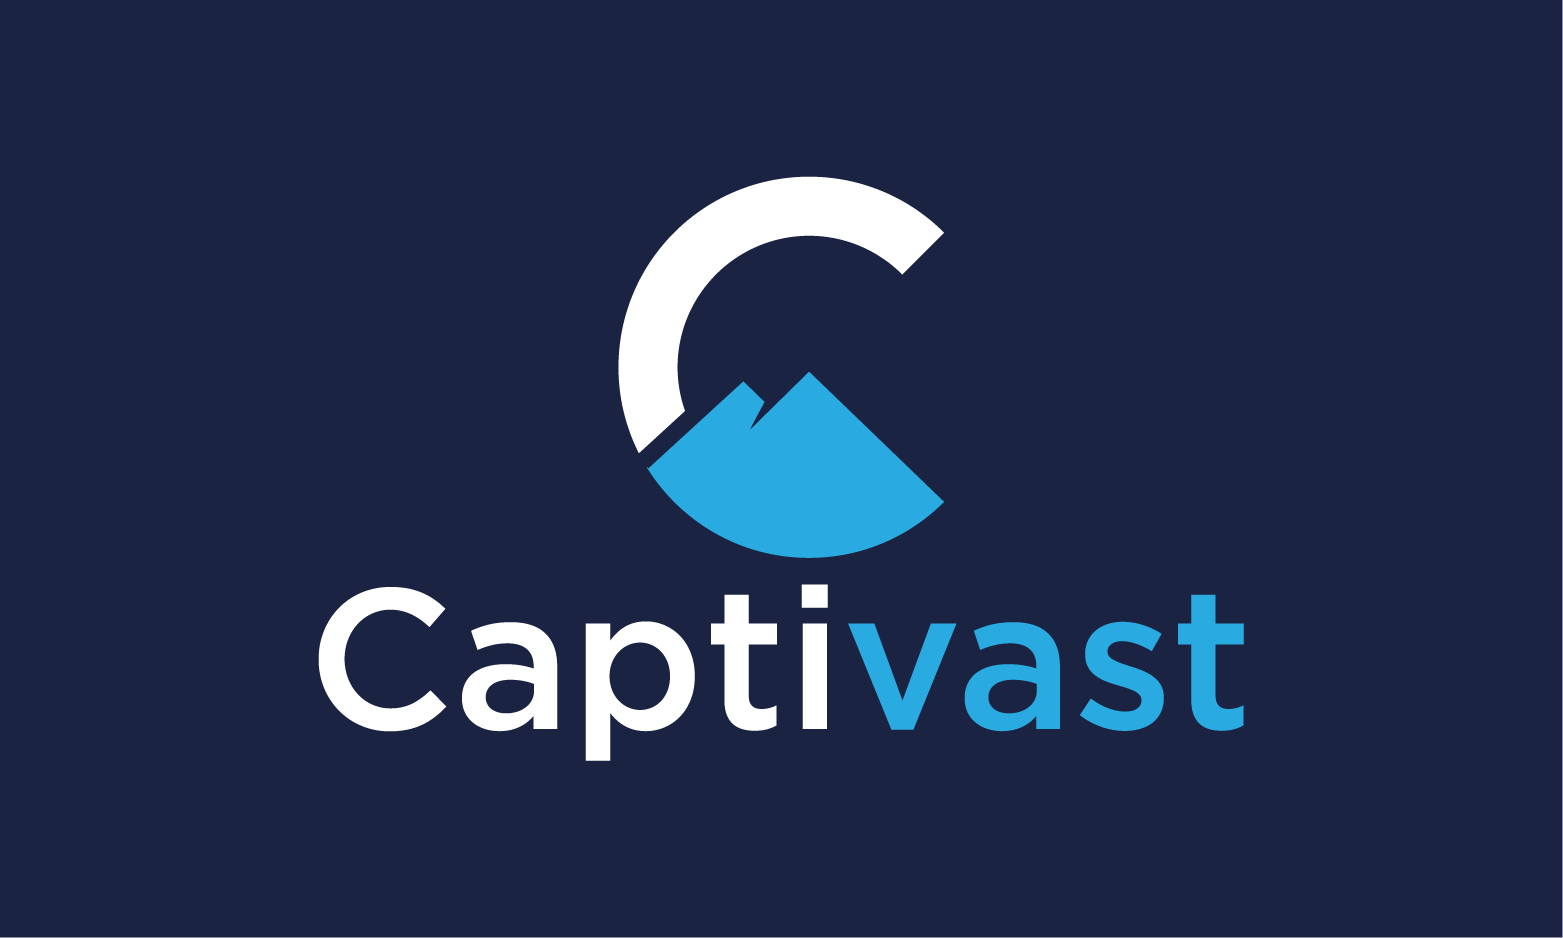 Captivast.com - Creative brandable domain for sale